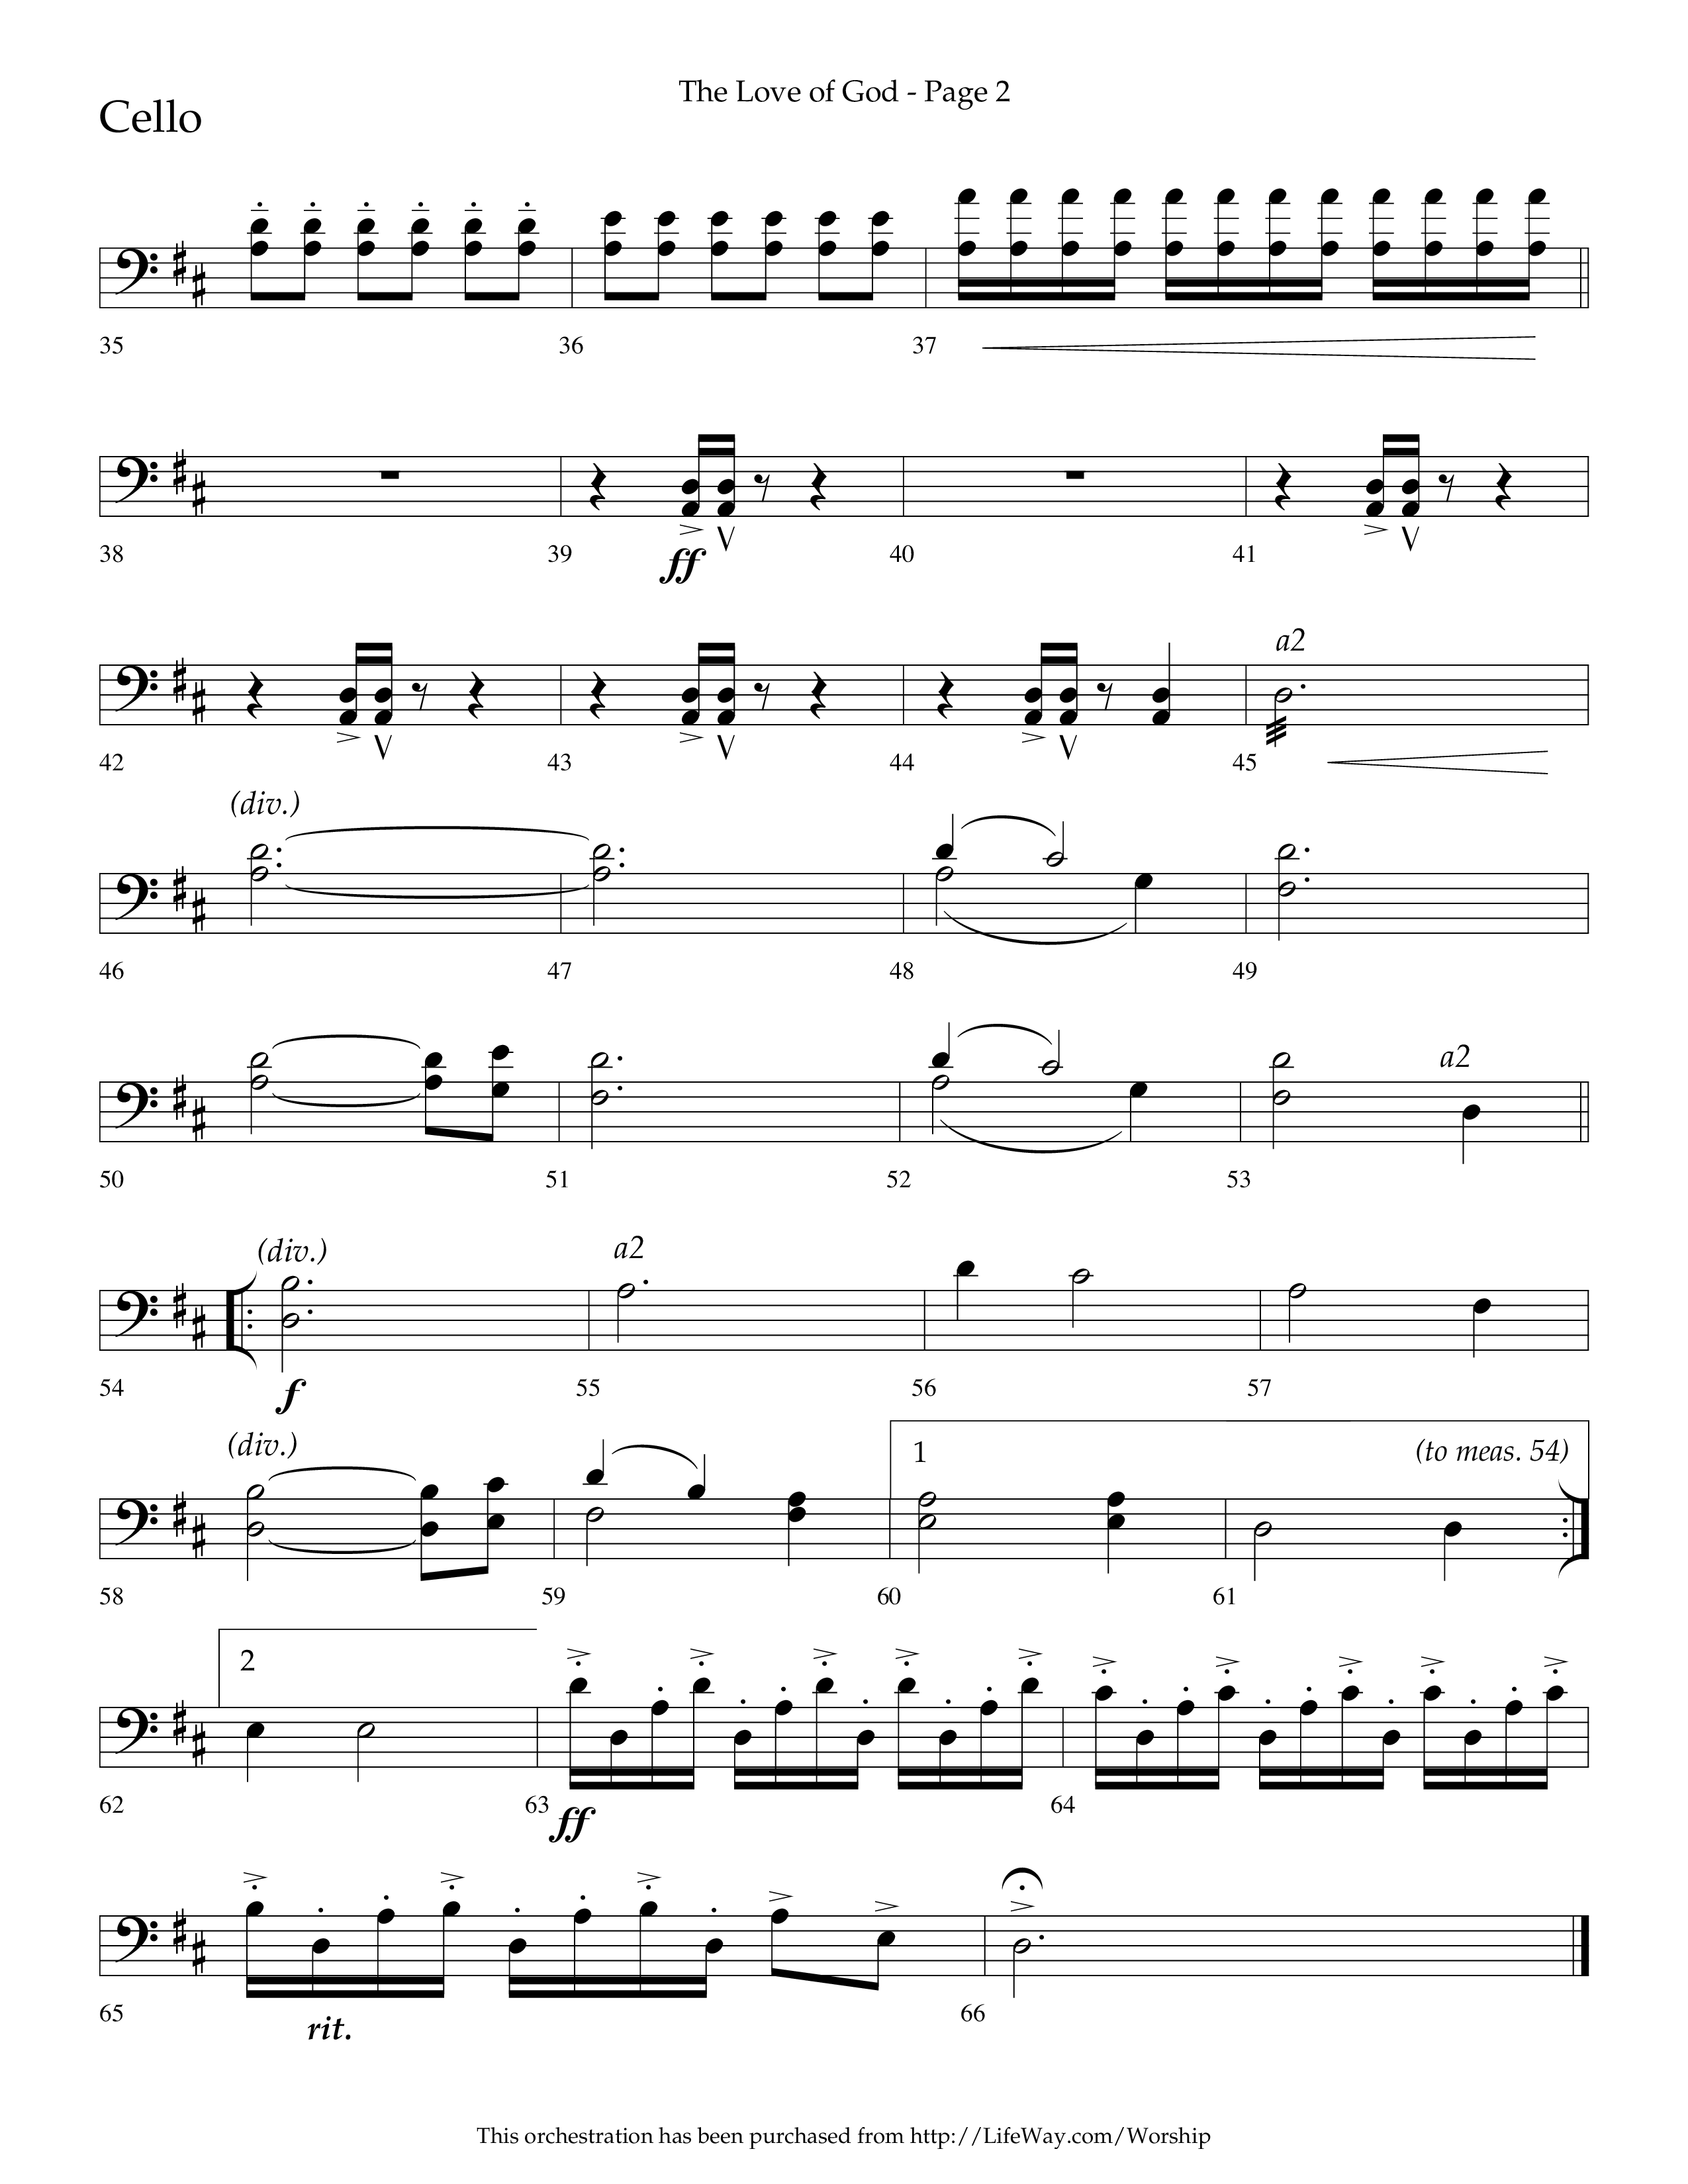 The Love of God (Choral Anthem SATB) Cello (Arr. Charlie Sinclair / Orch. Scott Harris / Lifeway Choral)